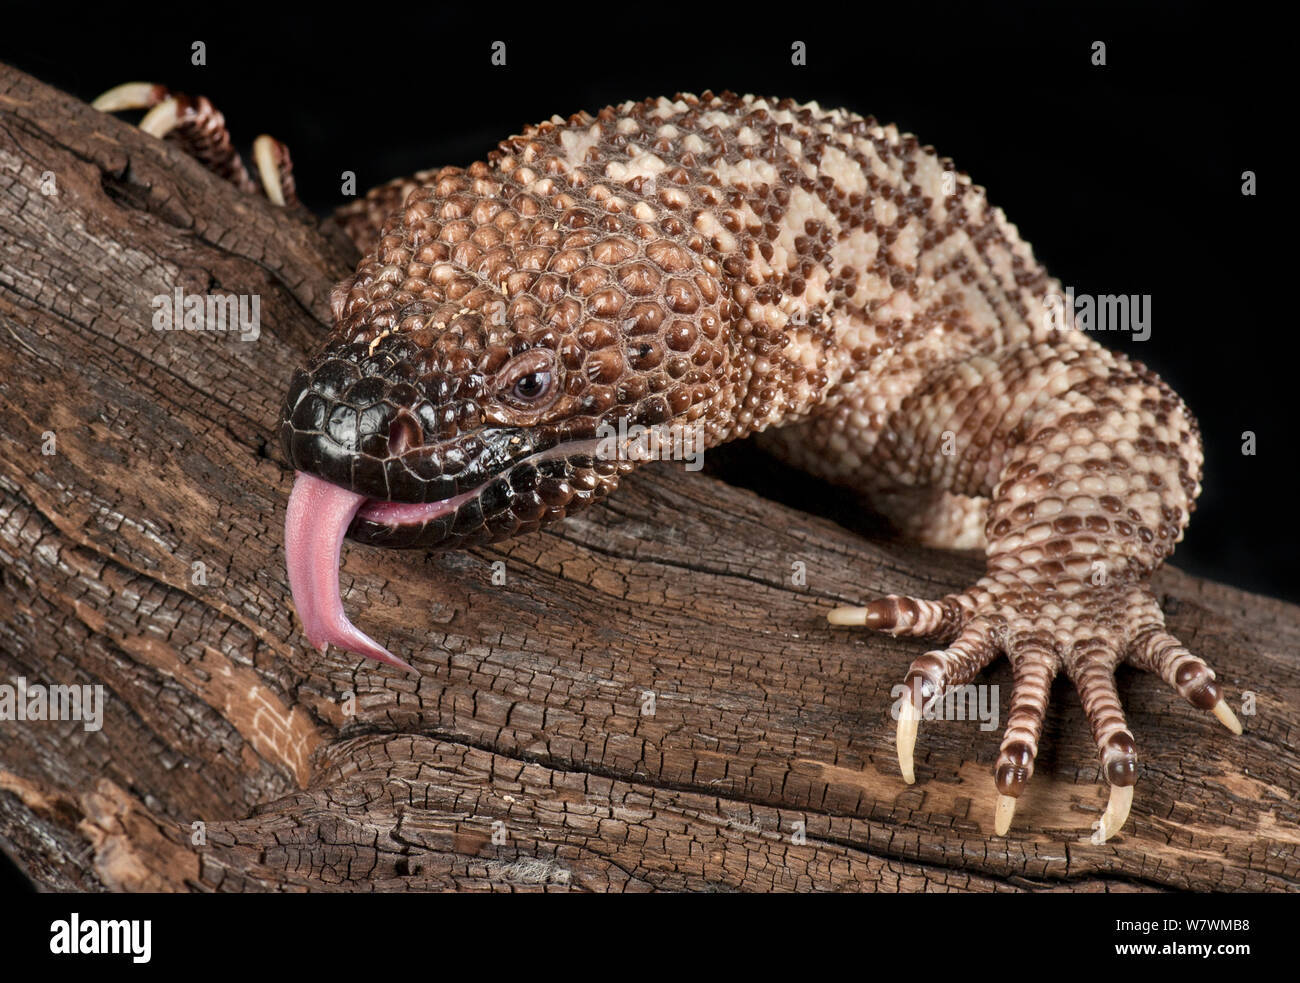 Mexican Beaded Lizard (Heloderma horridum) sensing with tongue, captive, native to Mexico and Guatemala. Stock Photo